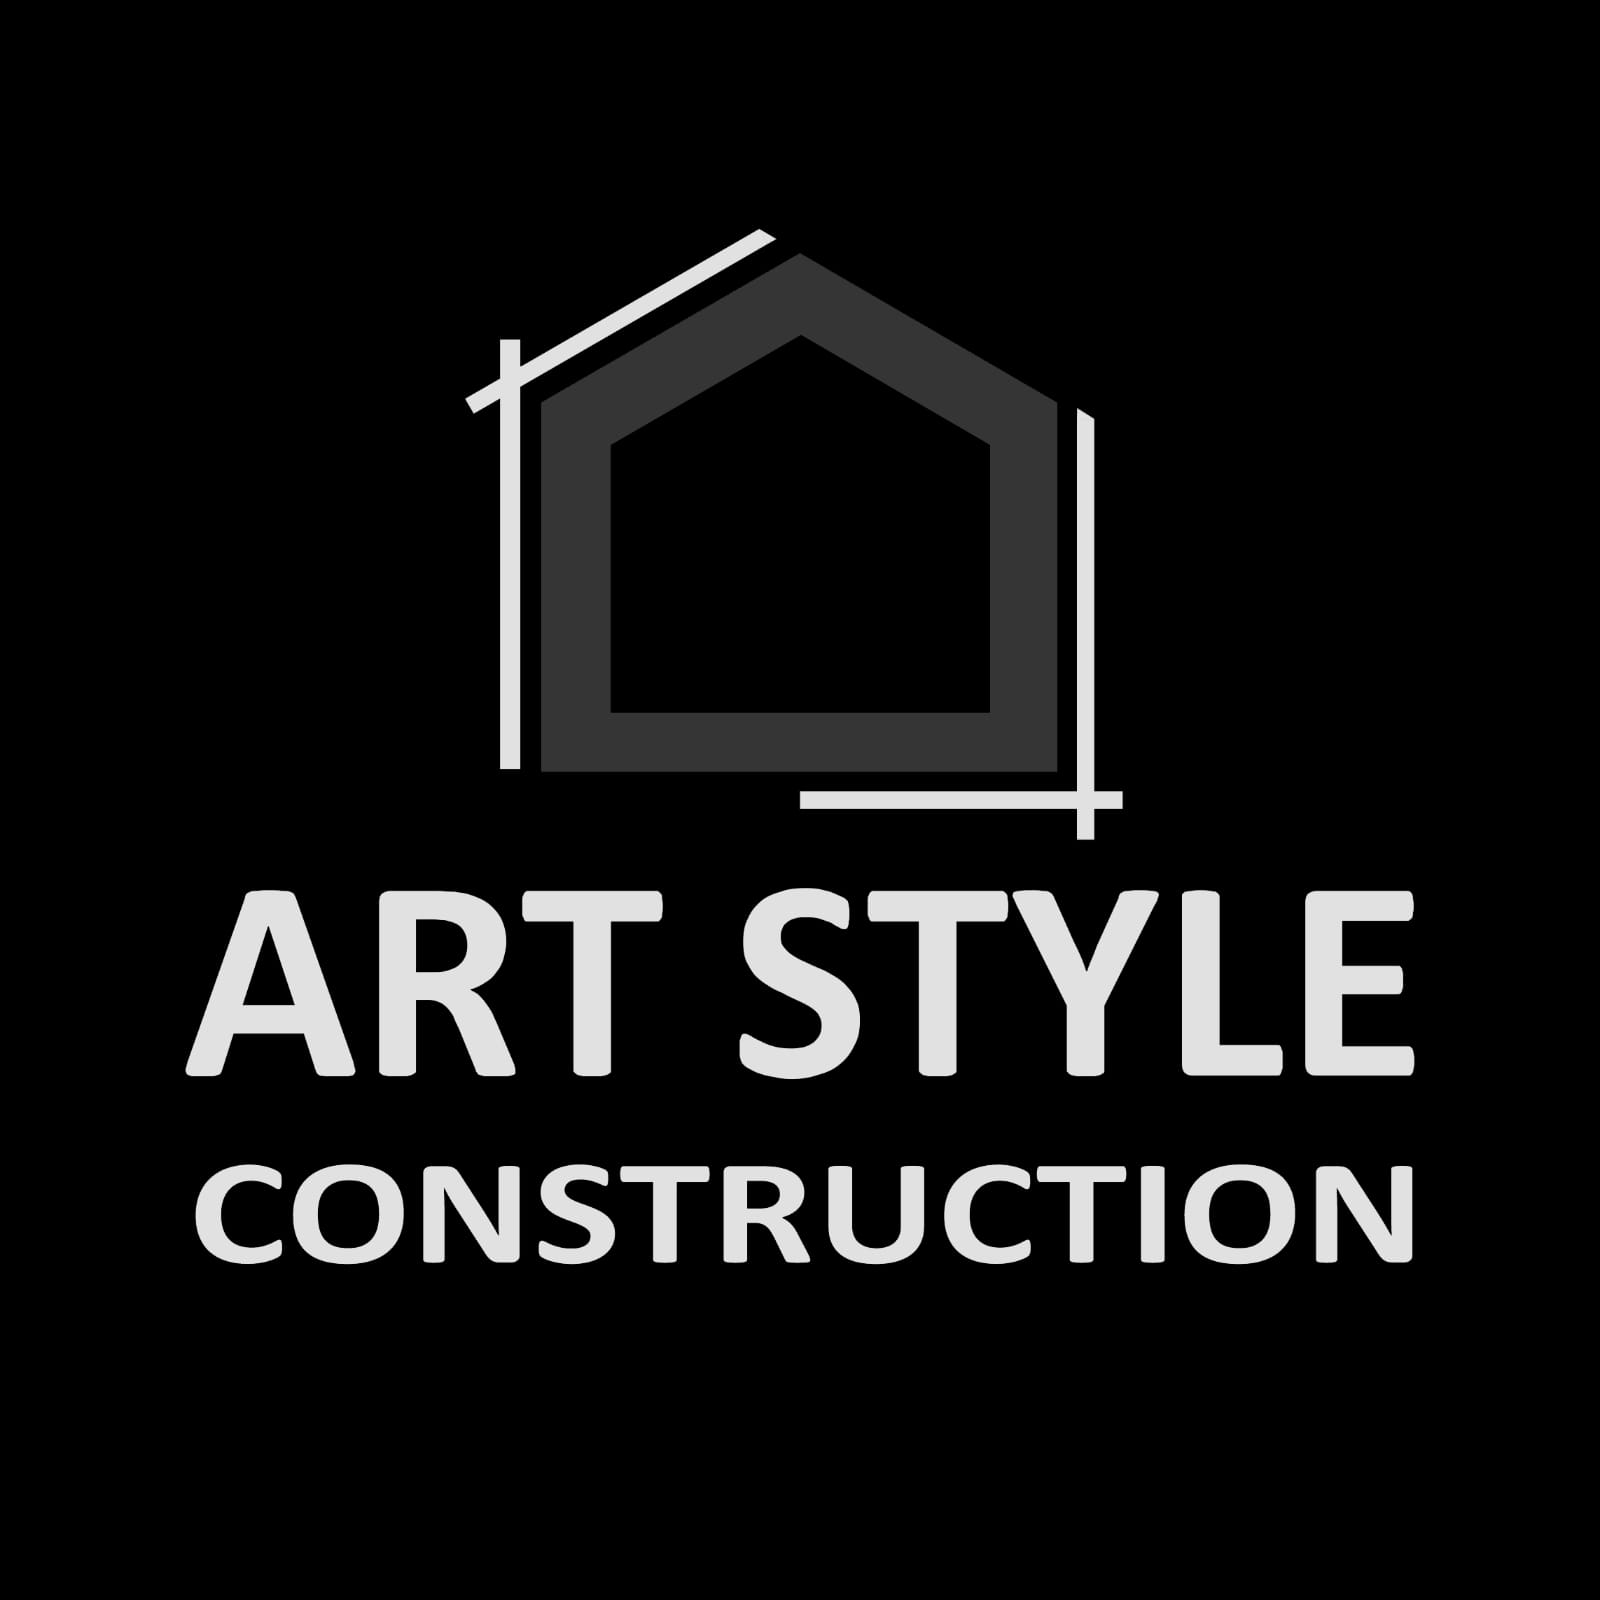 Art Style Construction (ООО АС) Логотип(logo)